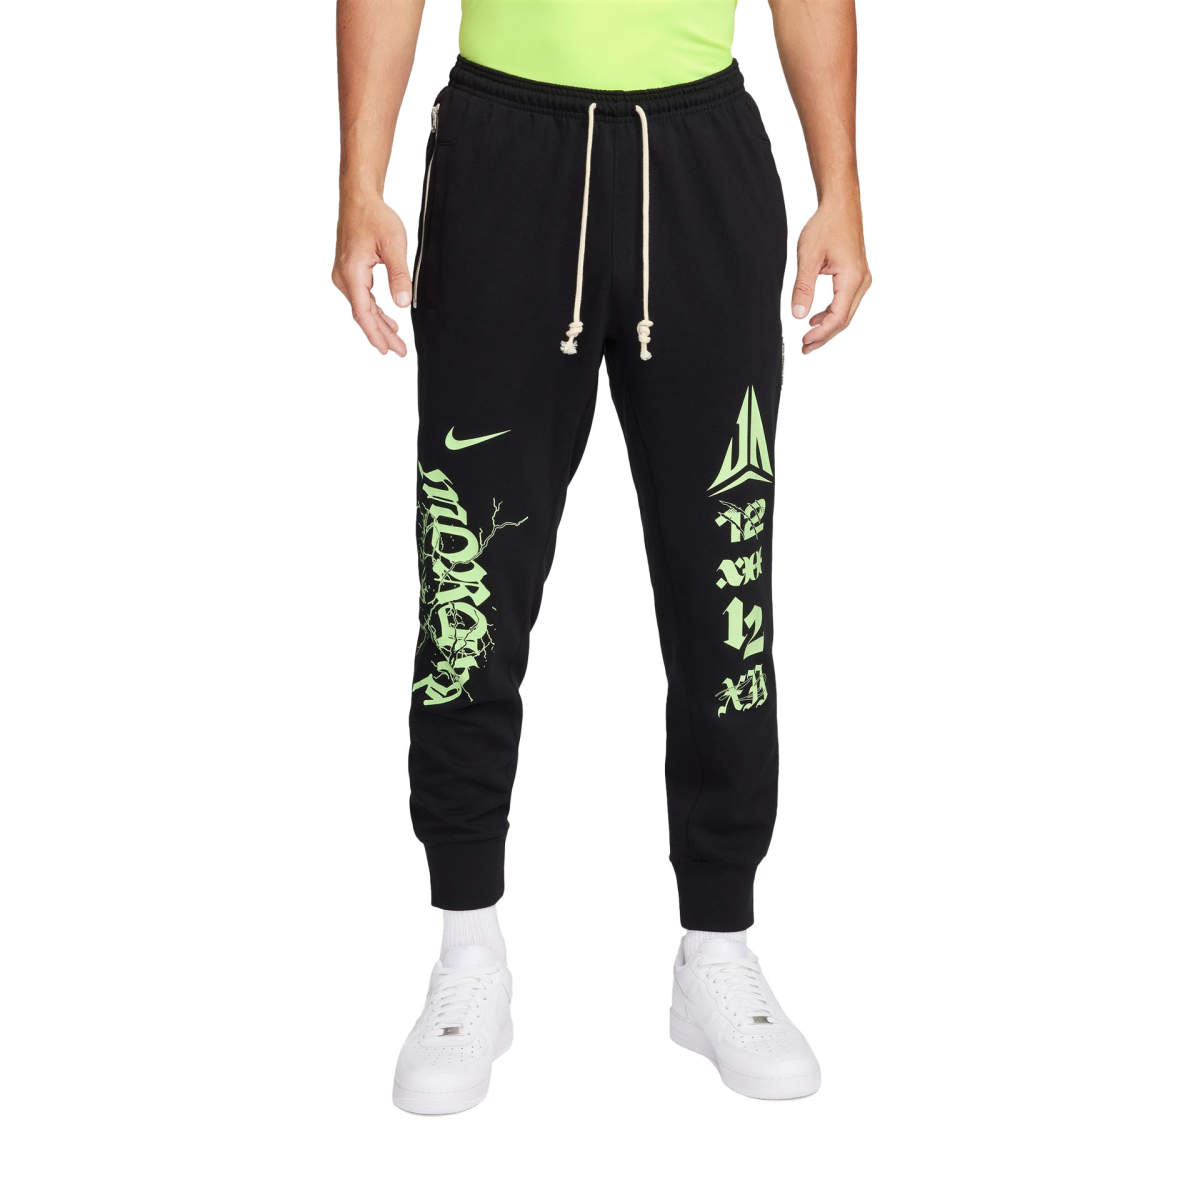 Boys Adidas NBA Miami Heat jogging pants size S